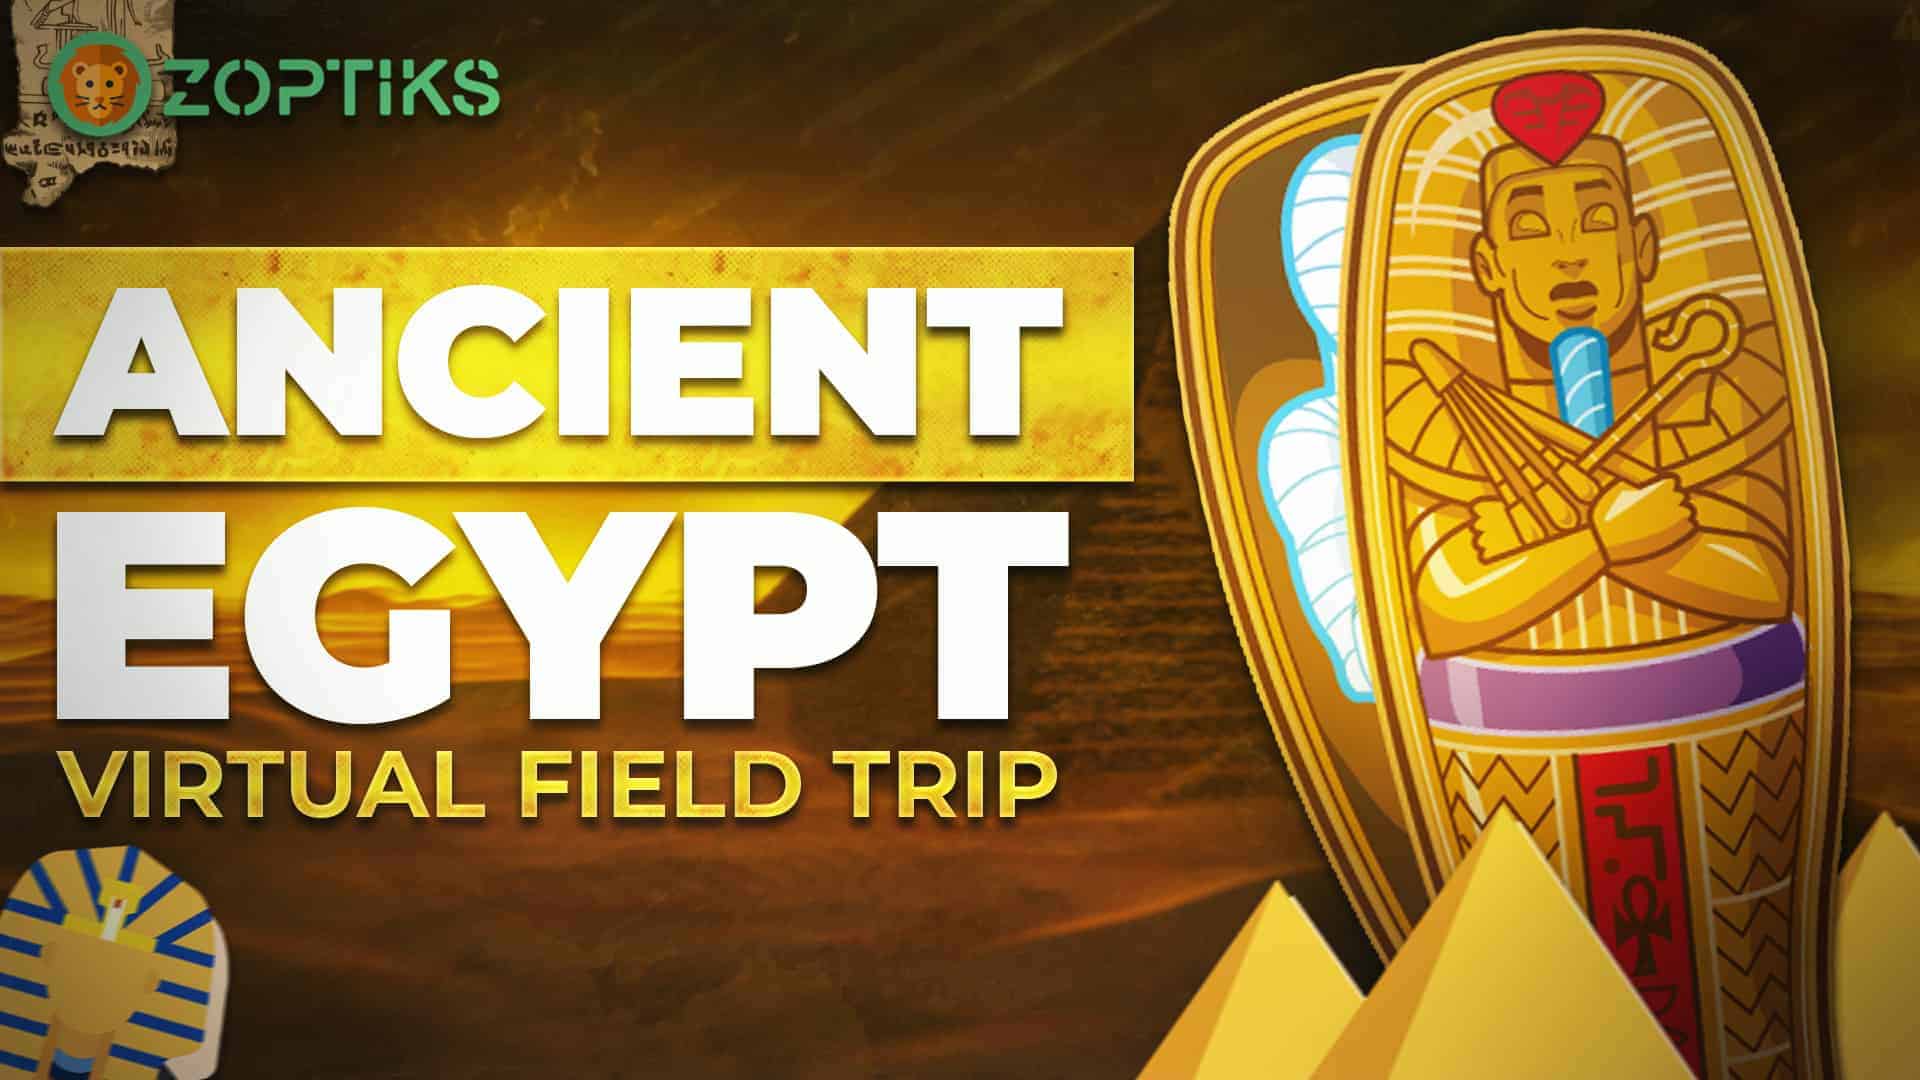 Ancient egypt virtual field trip